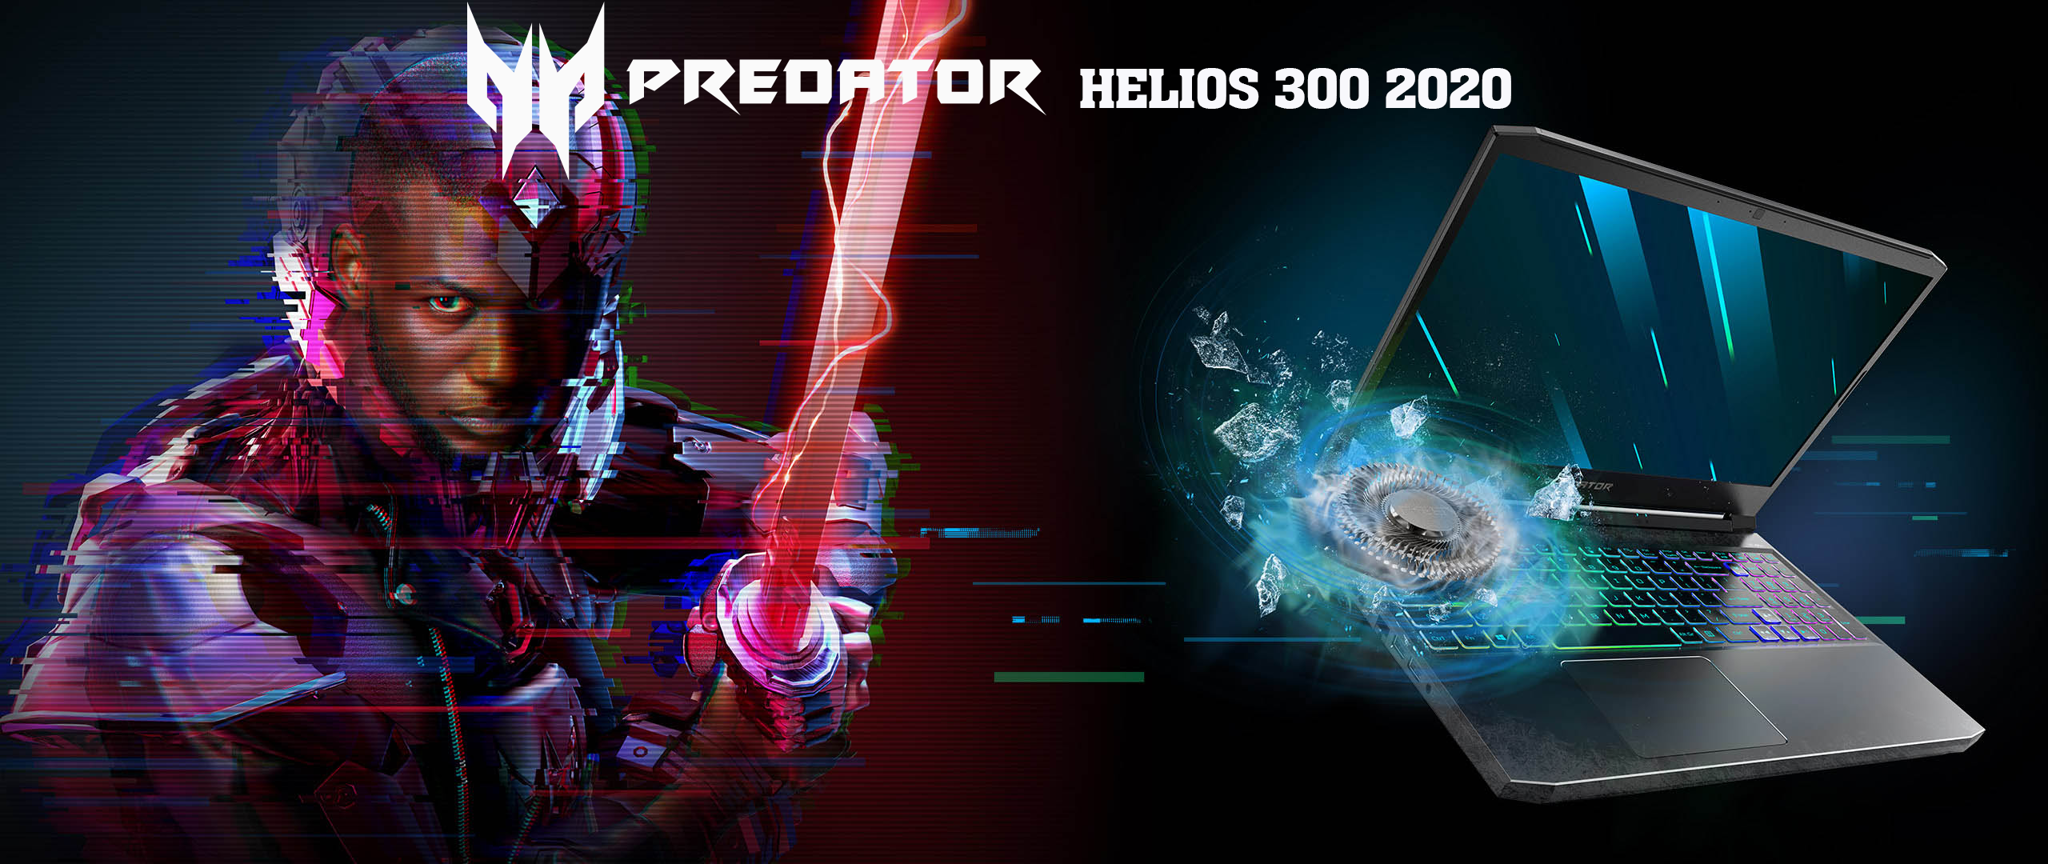 Acer Predator Helios 300 2020: Sự trở lại của vị vua